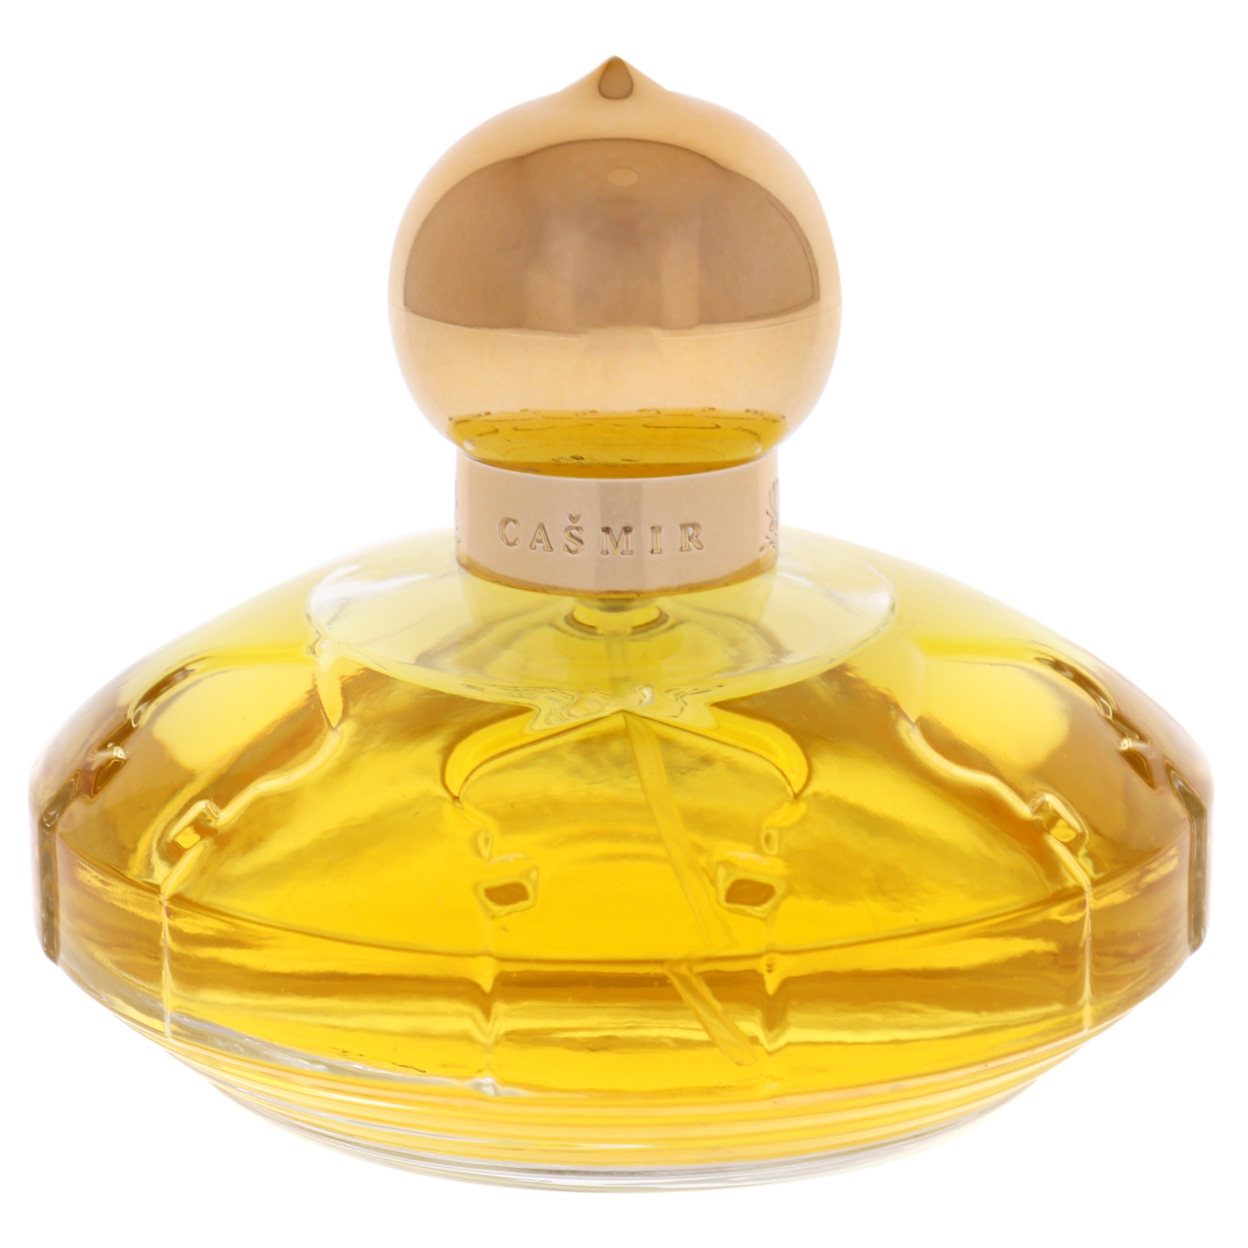 Chopard Casmir Eau de Parfum, Perfume for Women, 3.4 Oz - image 2 of 6